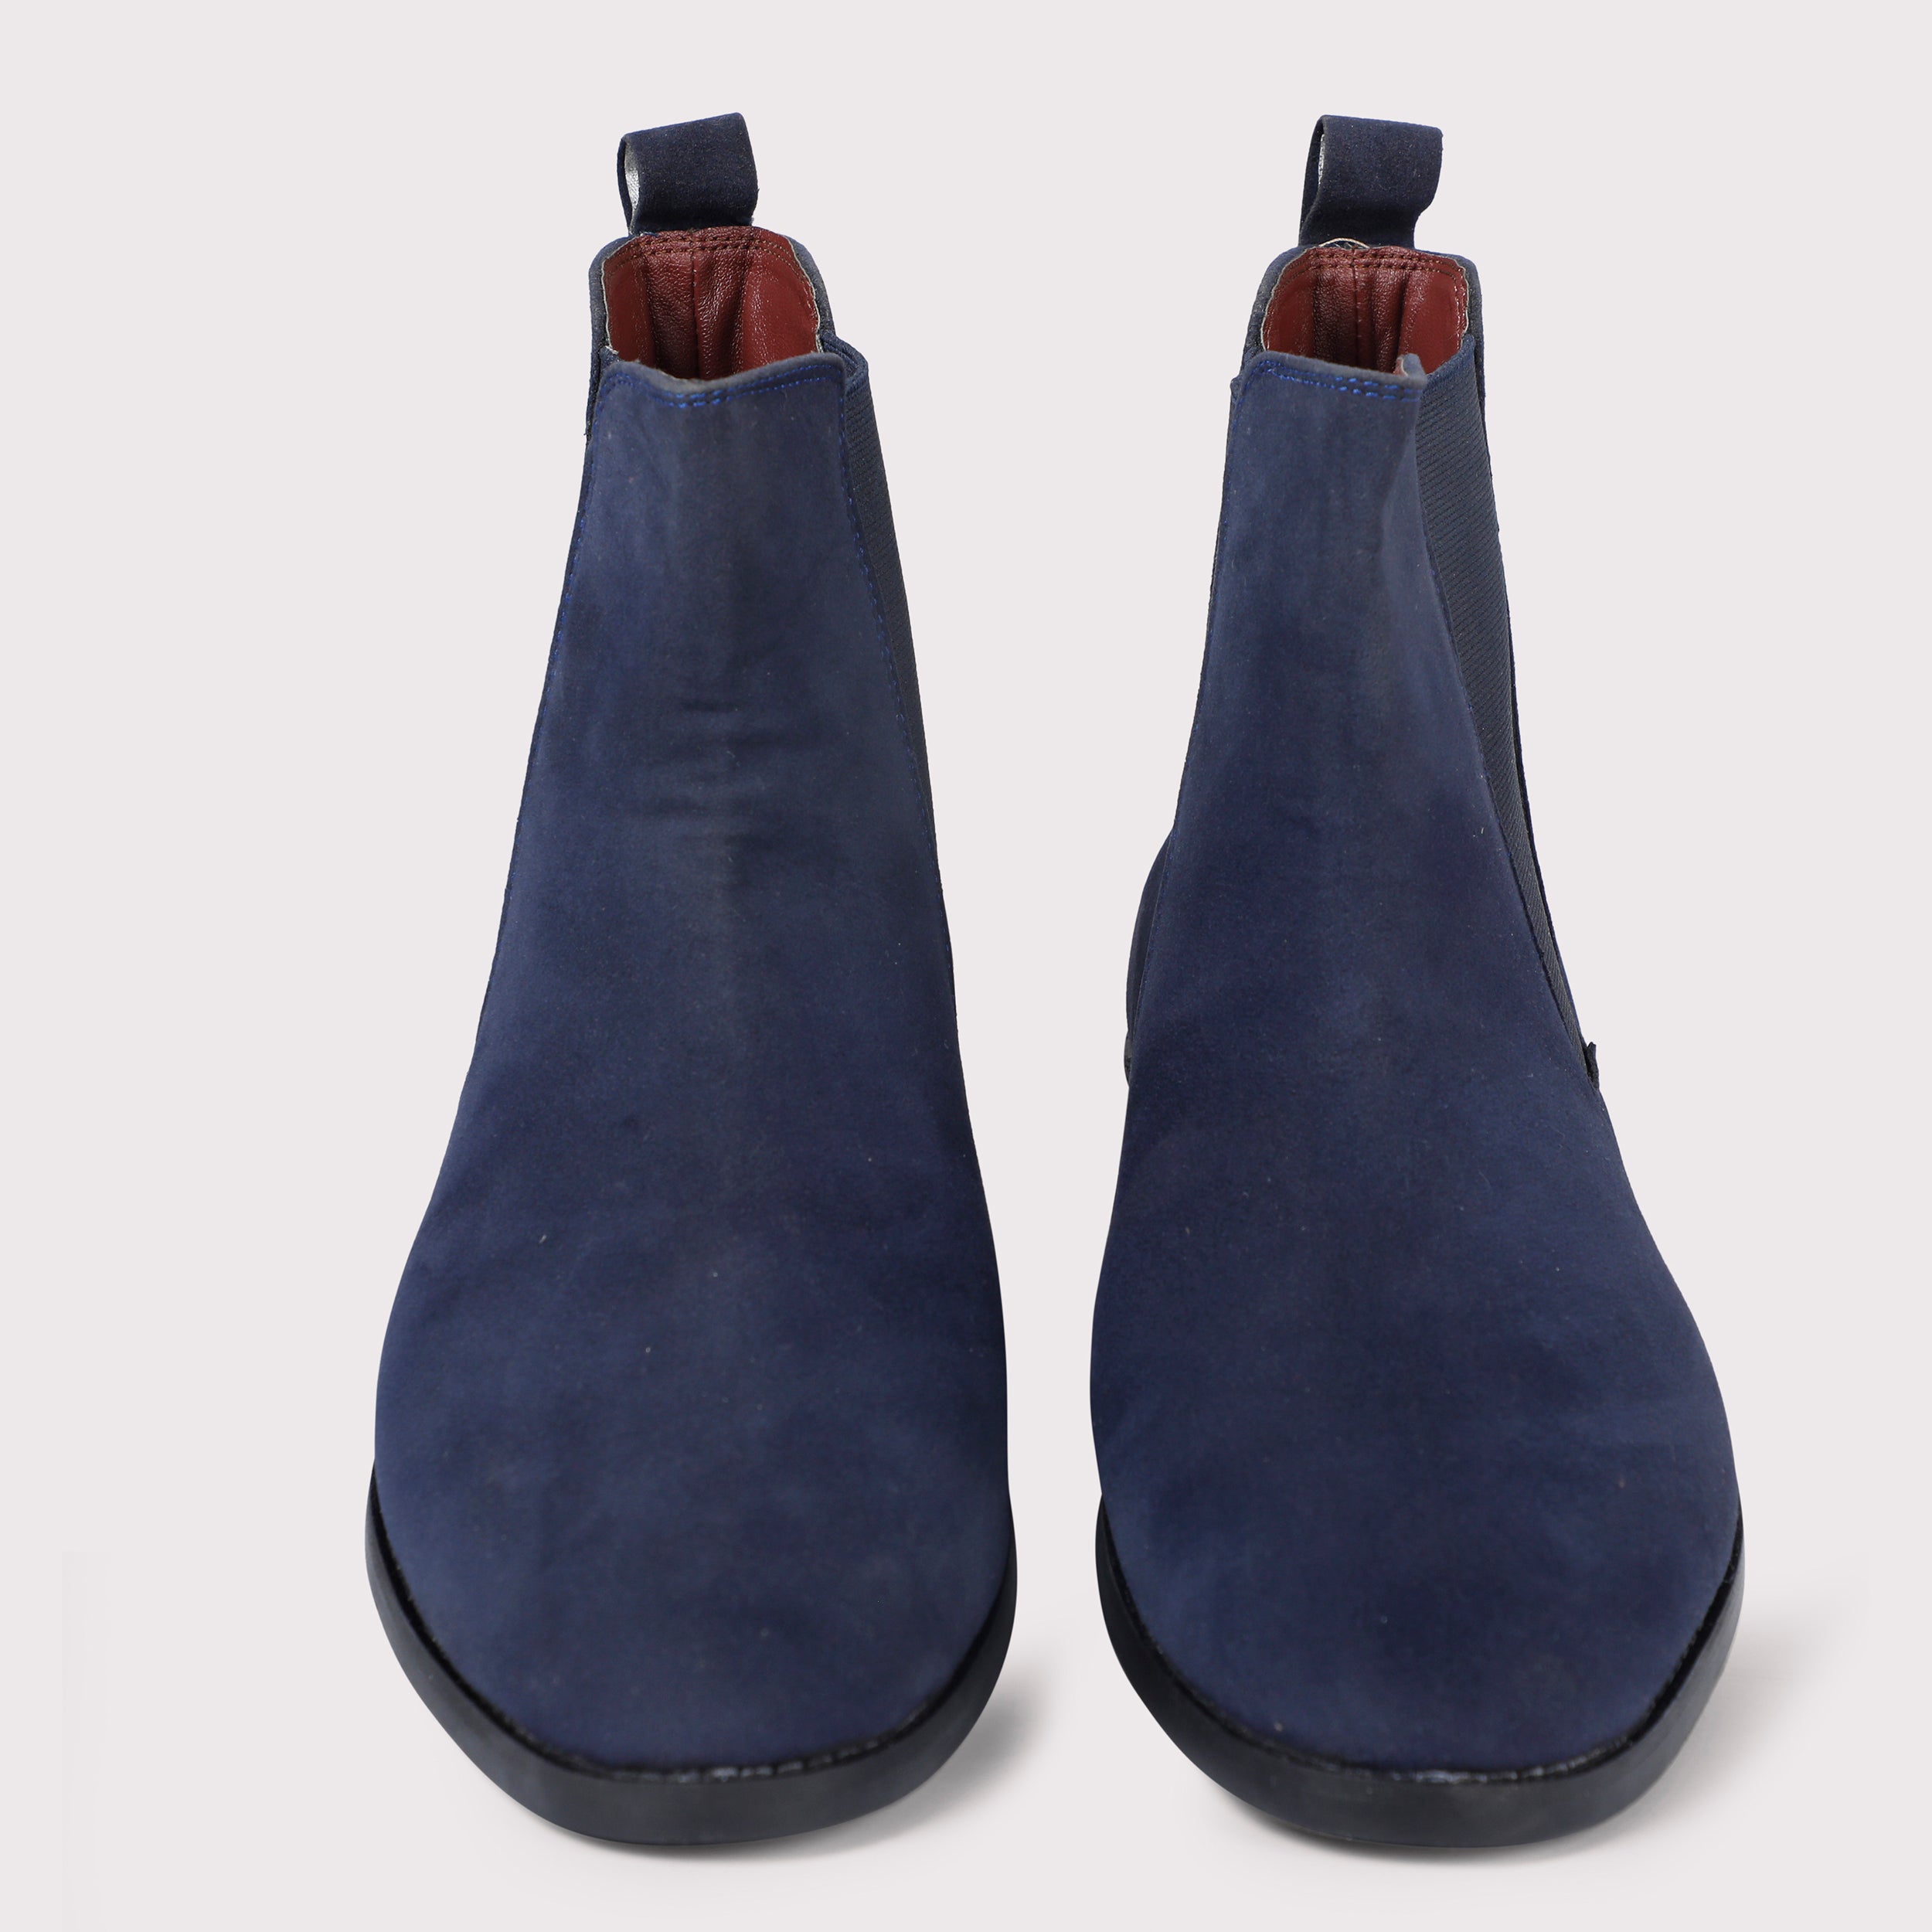 Slip-On, Pointed-Toe : Knee High Boots for Women : Goda - 0328GoF – Jhuti